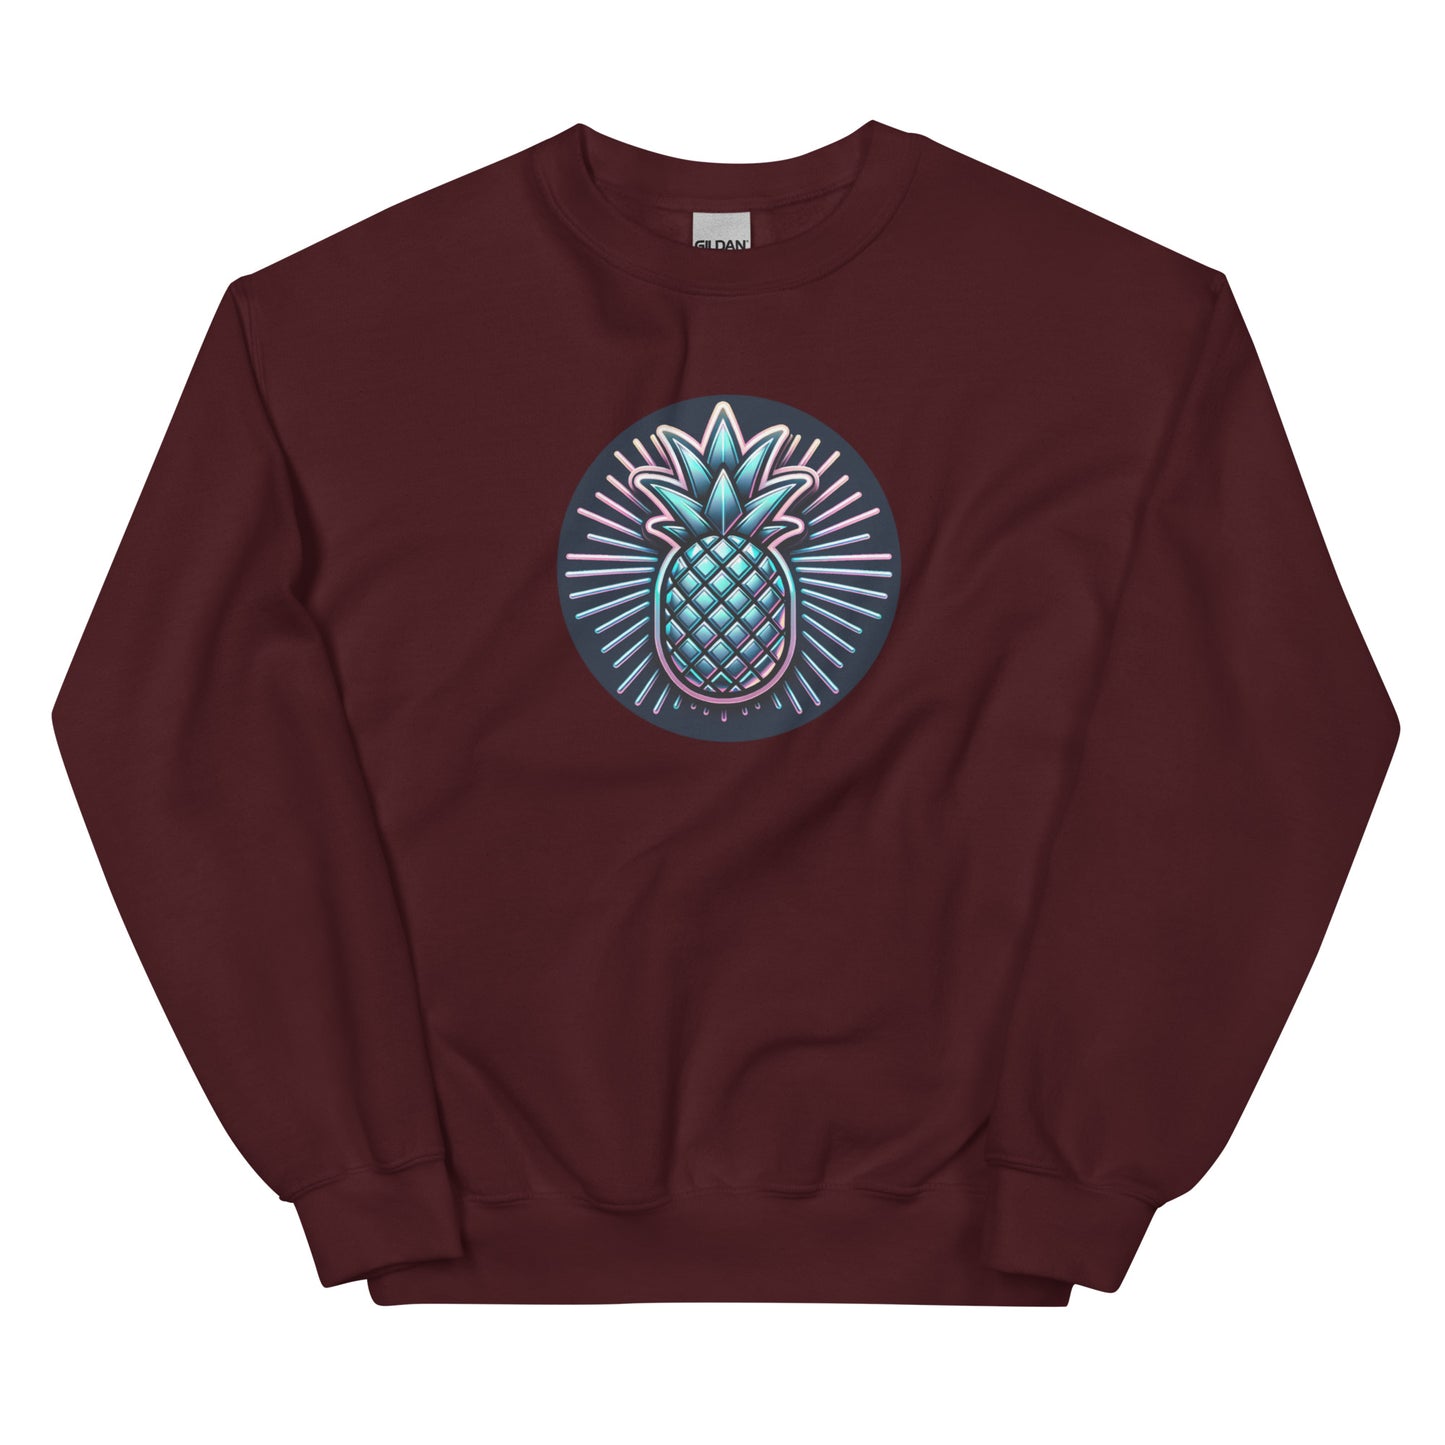 Shopijo’s Cool Graphic Pineapple Unisex Sweatshirt